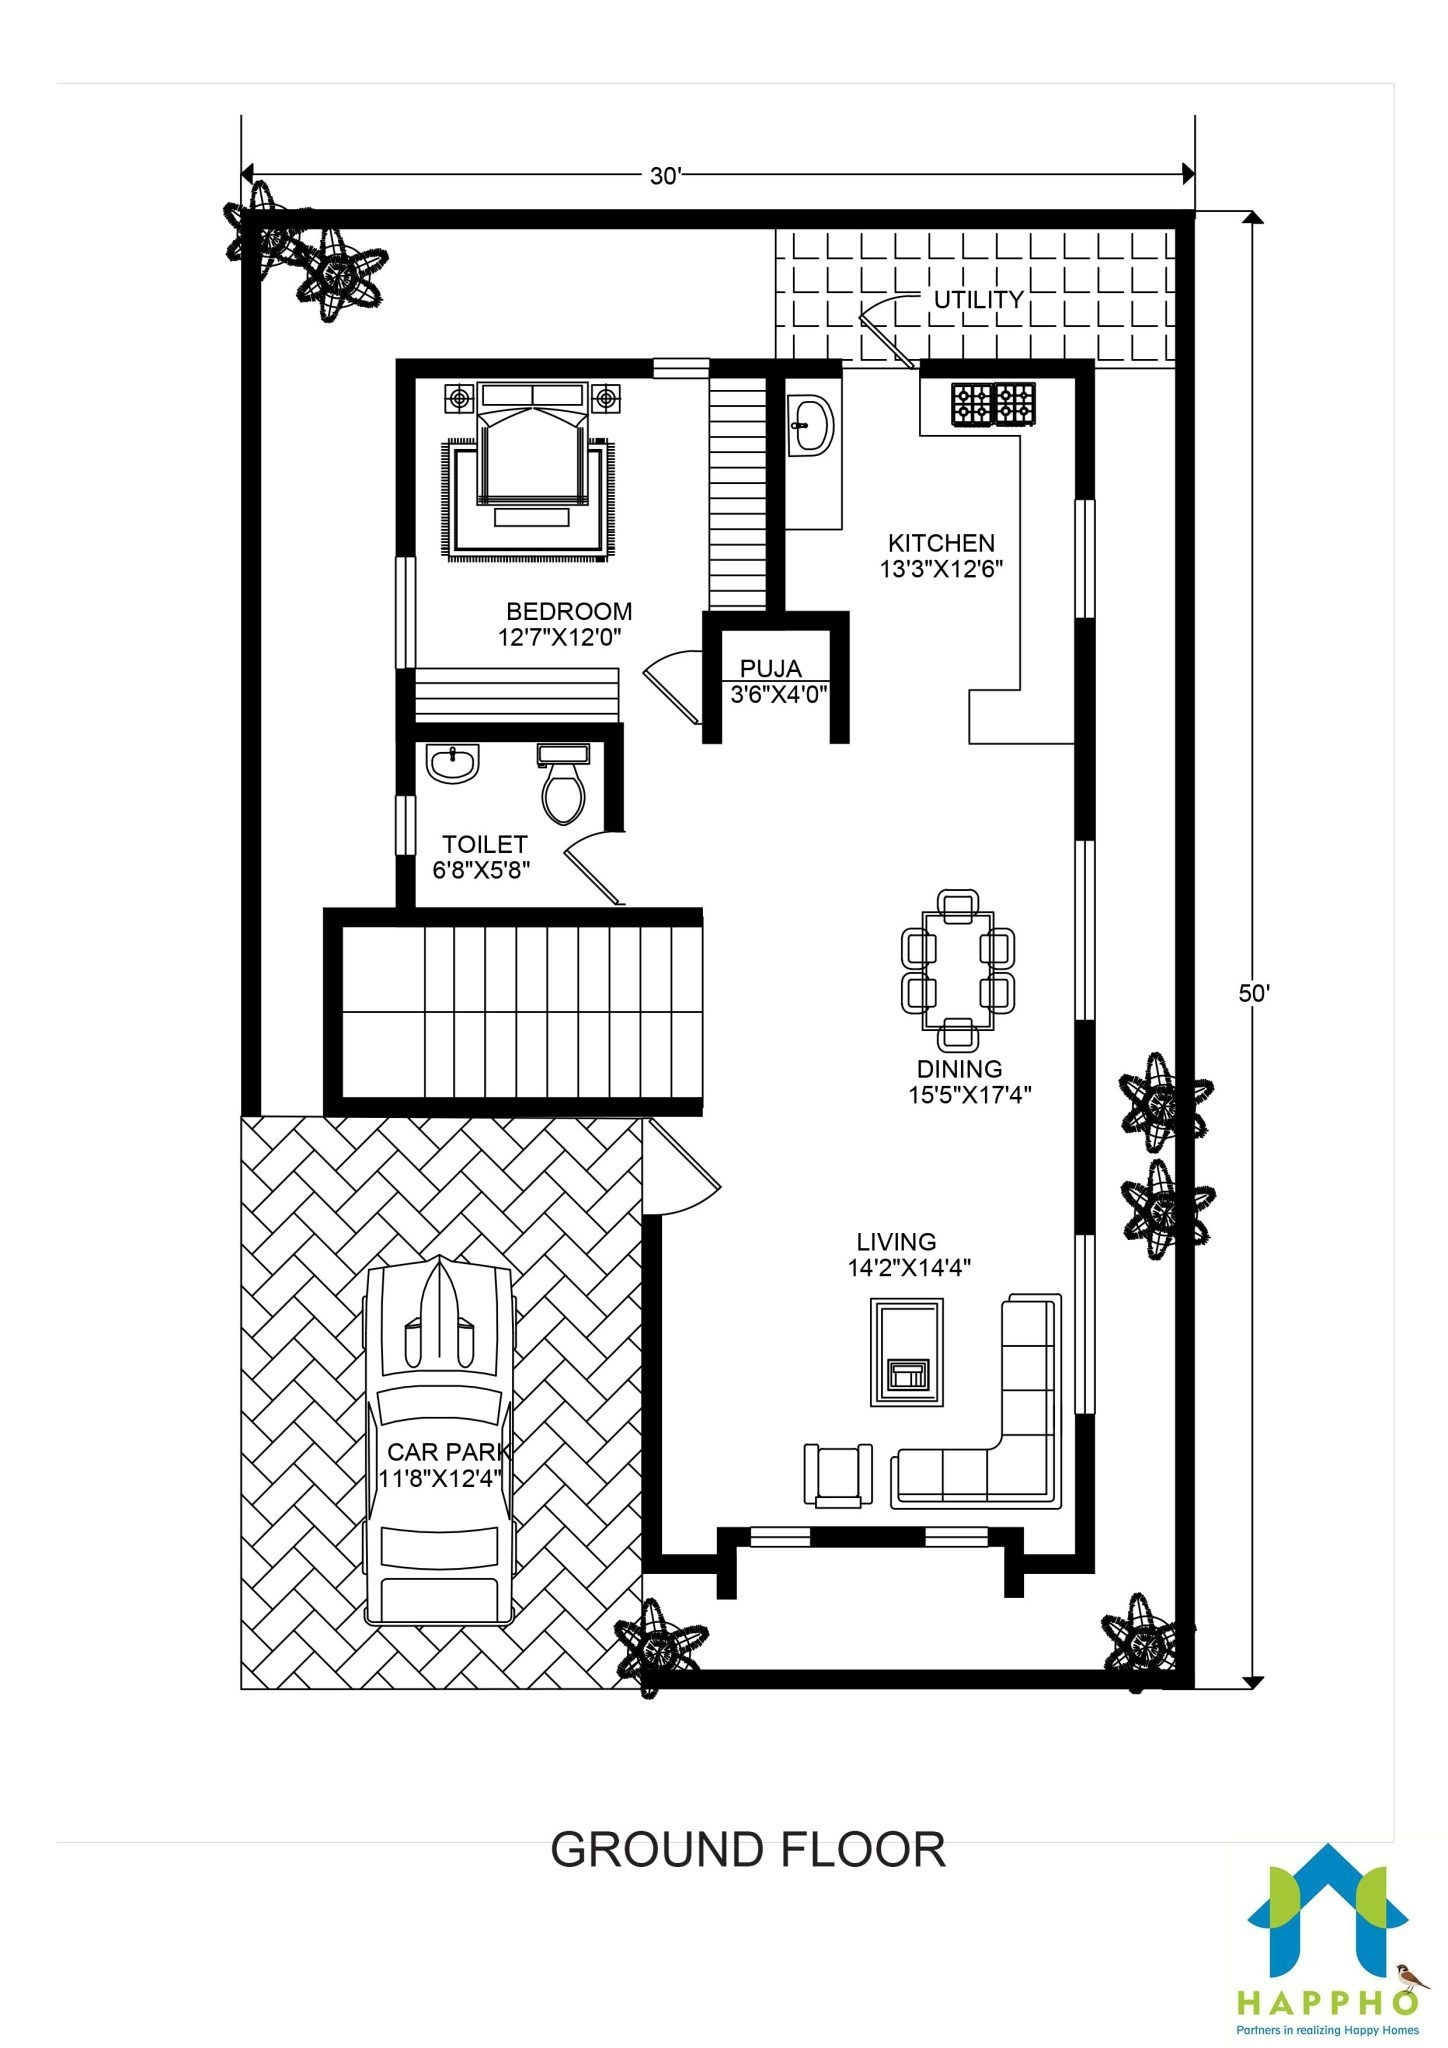 Interesting floor plan for 30 x 50 feet plot | 3 bhk (1500 square feet/167 sq yards pertaining to astonishing 1500 square feet house plans india